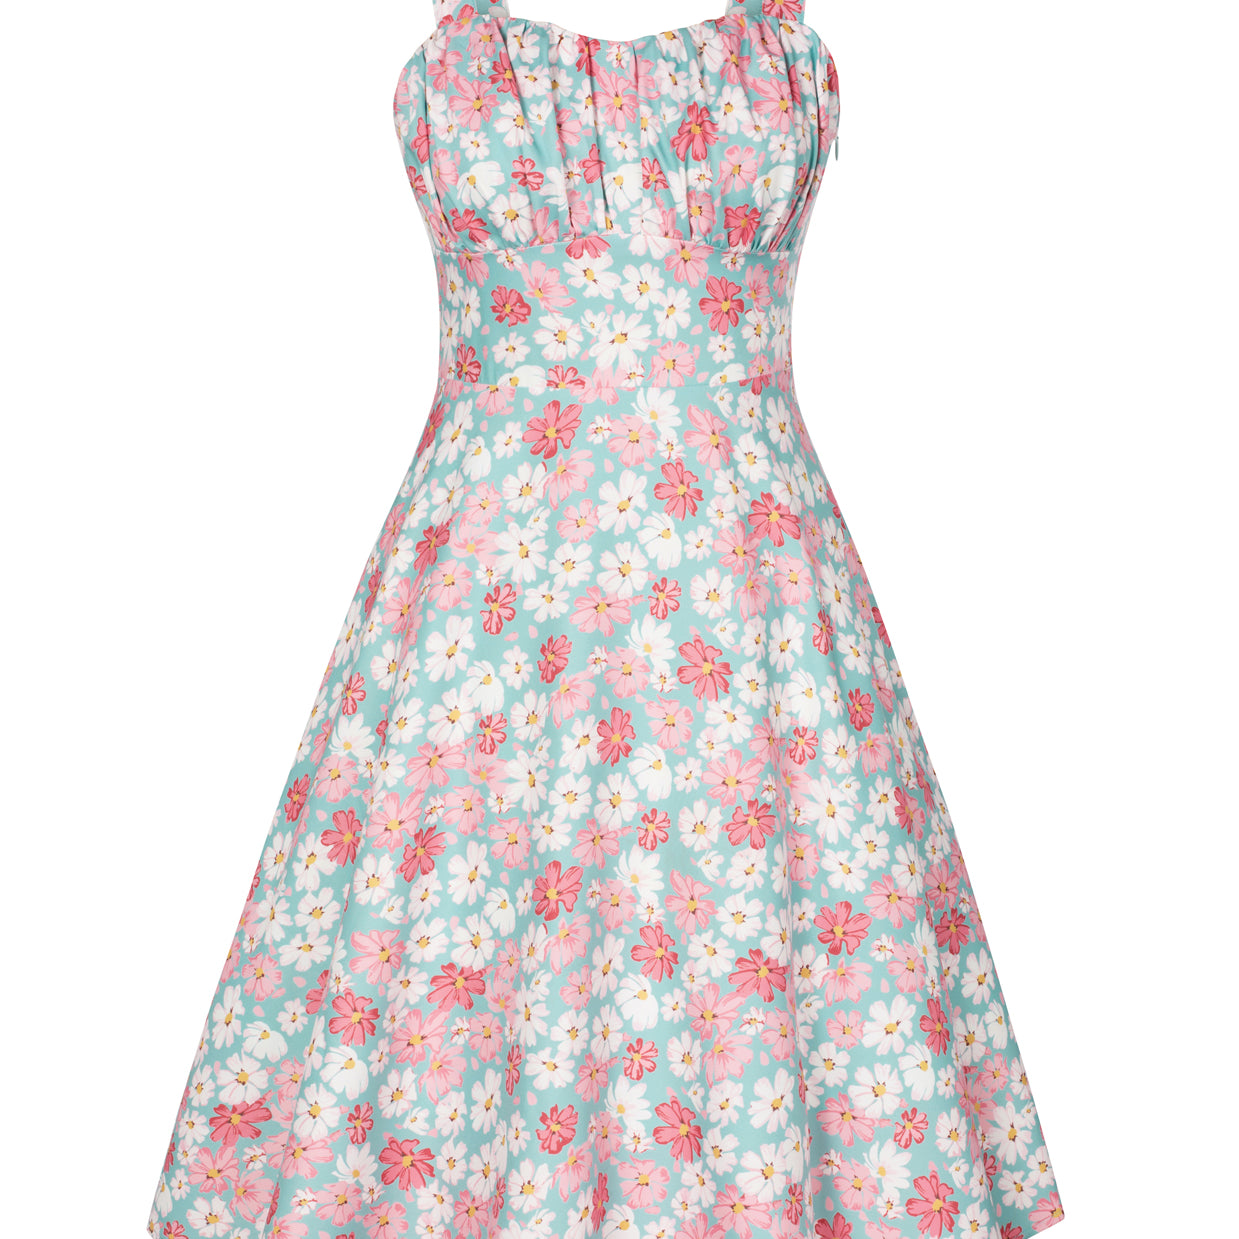 Vintage Floral Printed Defined Waist Dress Ruched Bodice Flared A-Line Dress